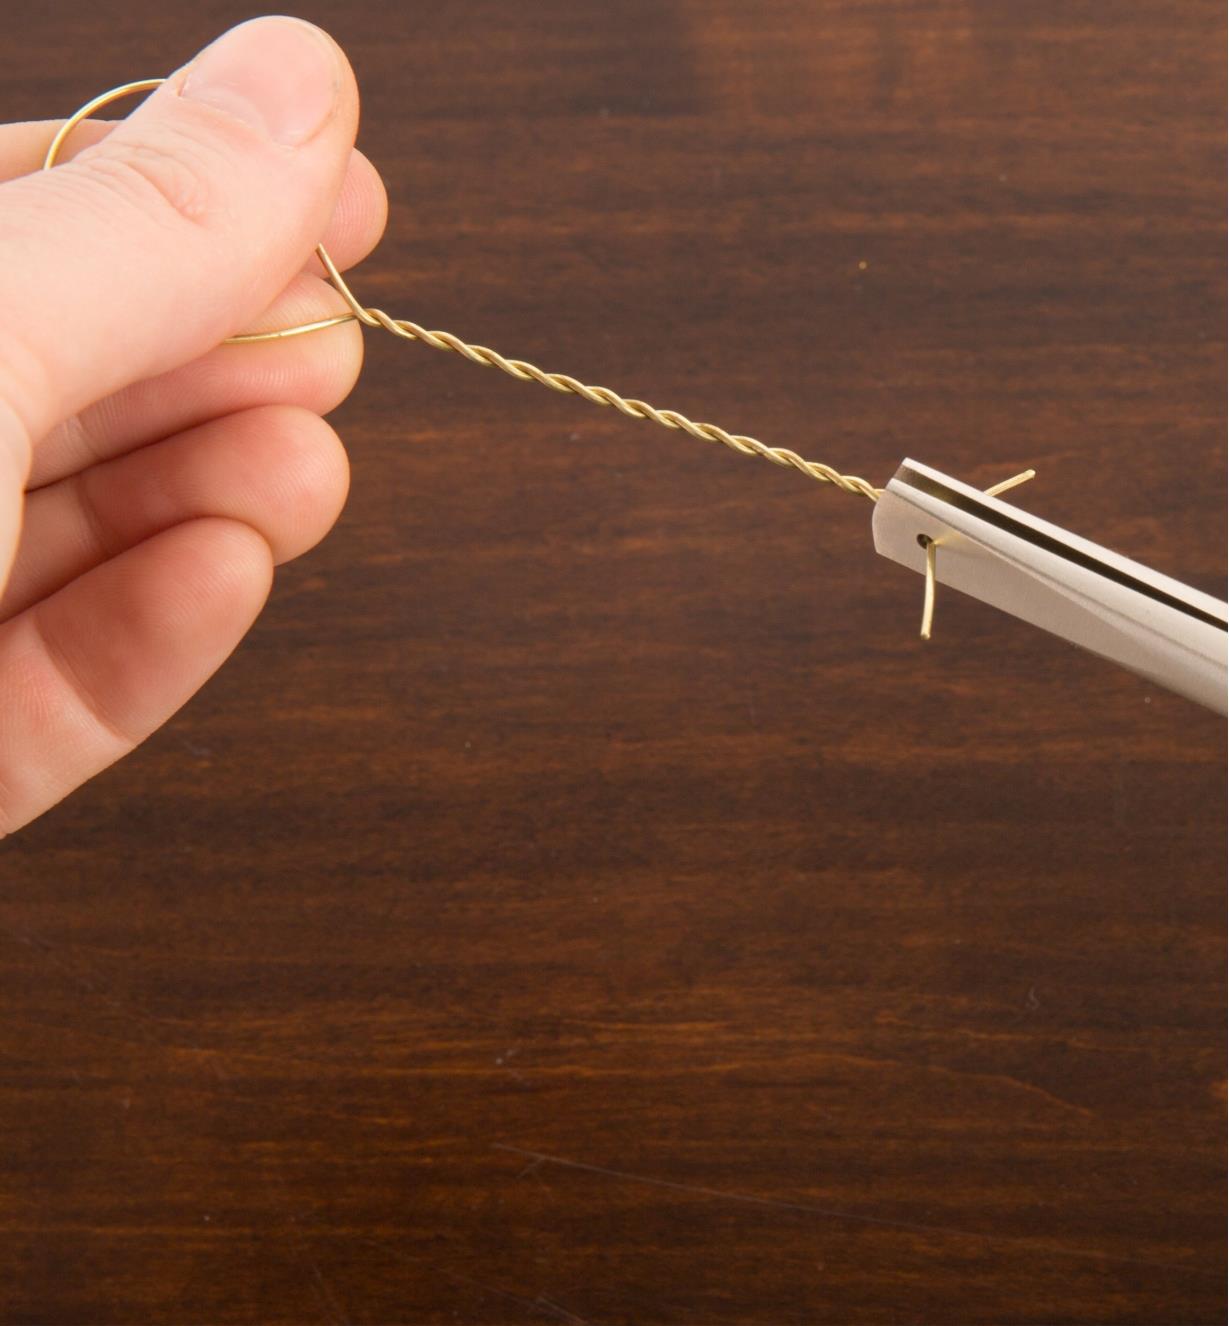 Using duck-bill pliers to twist wires